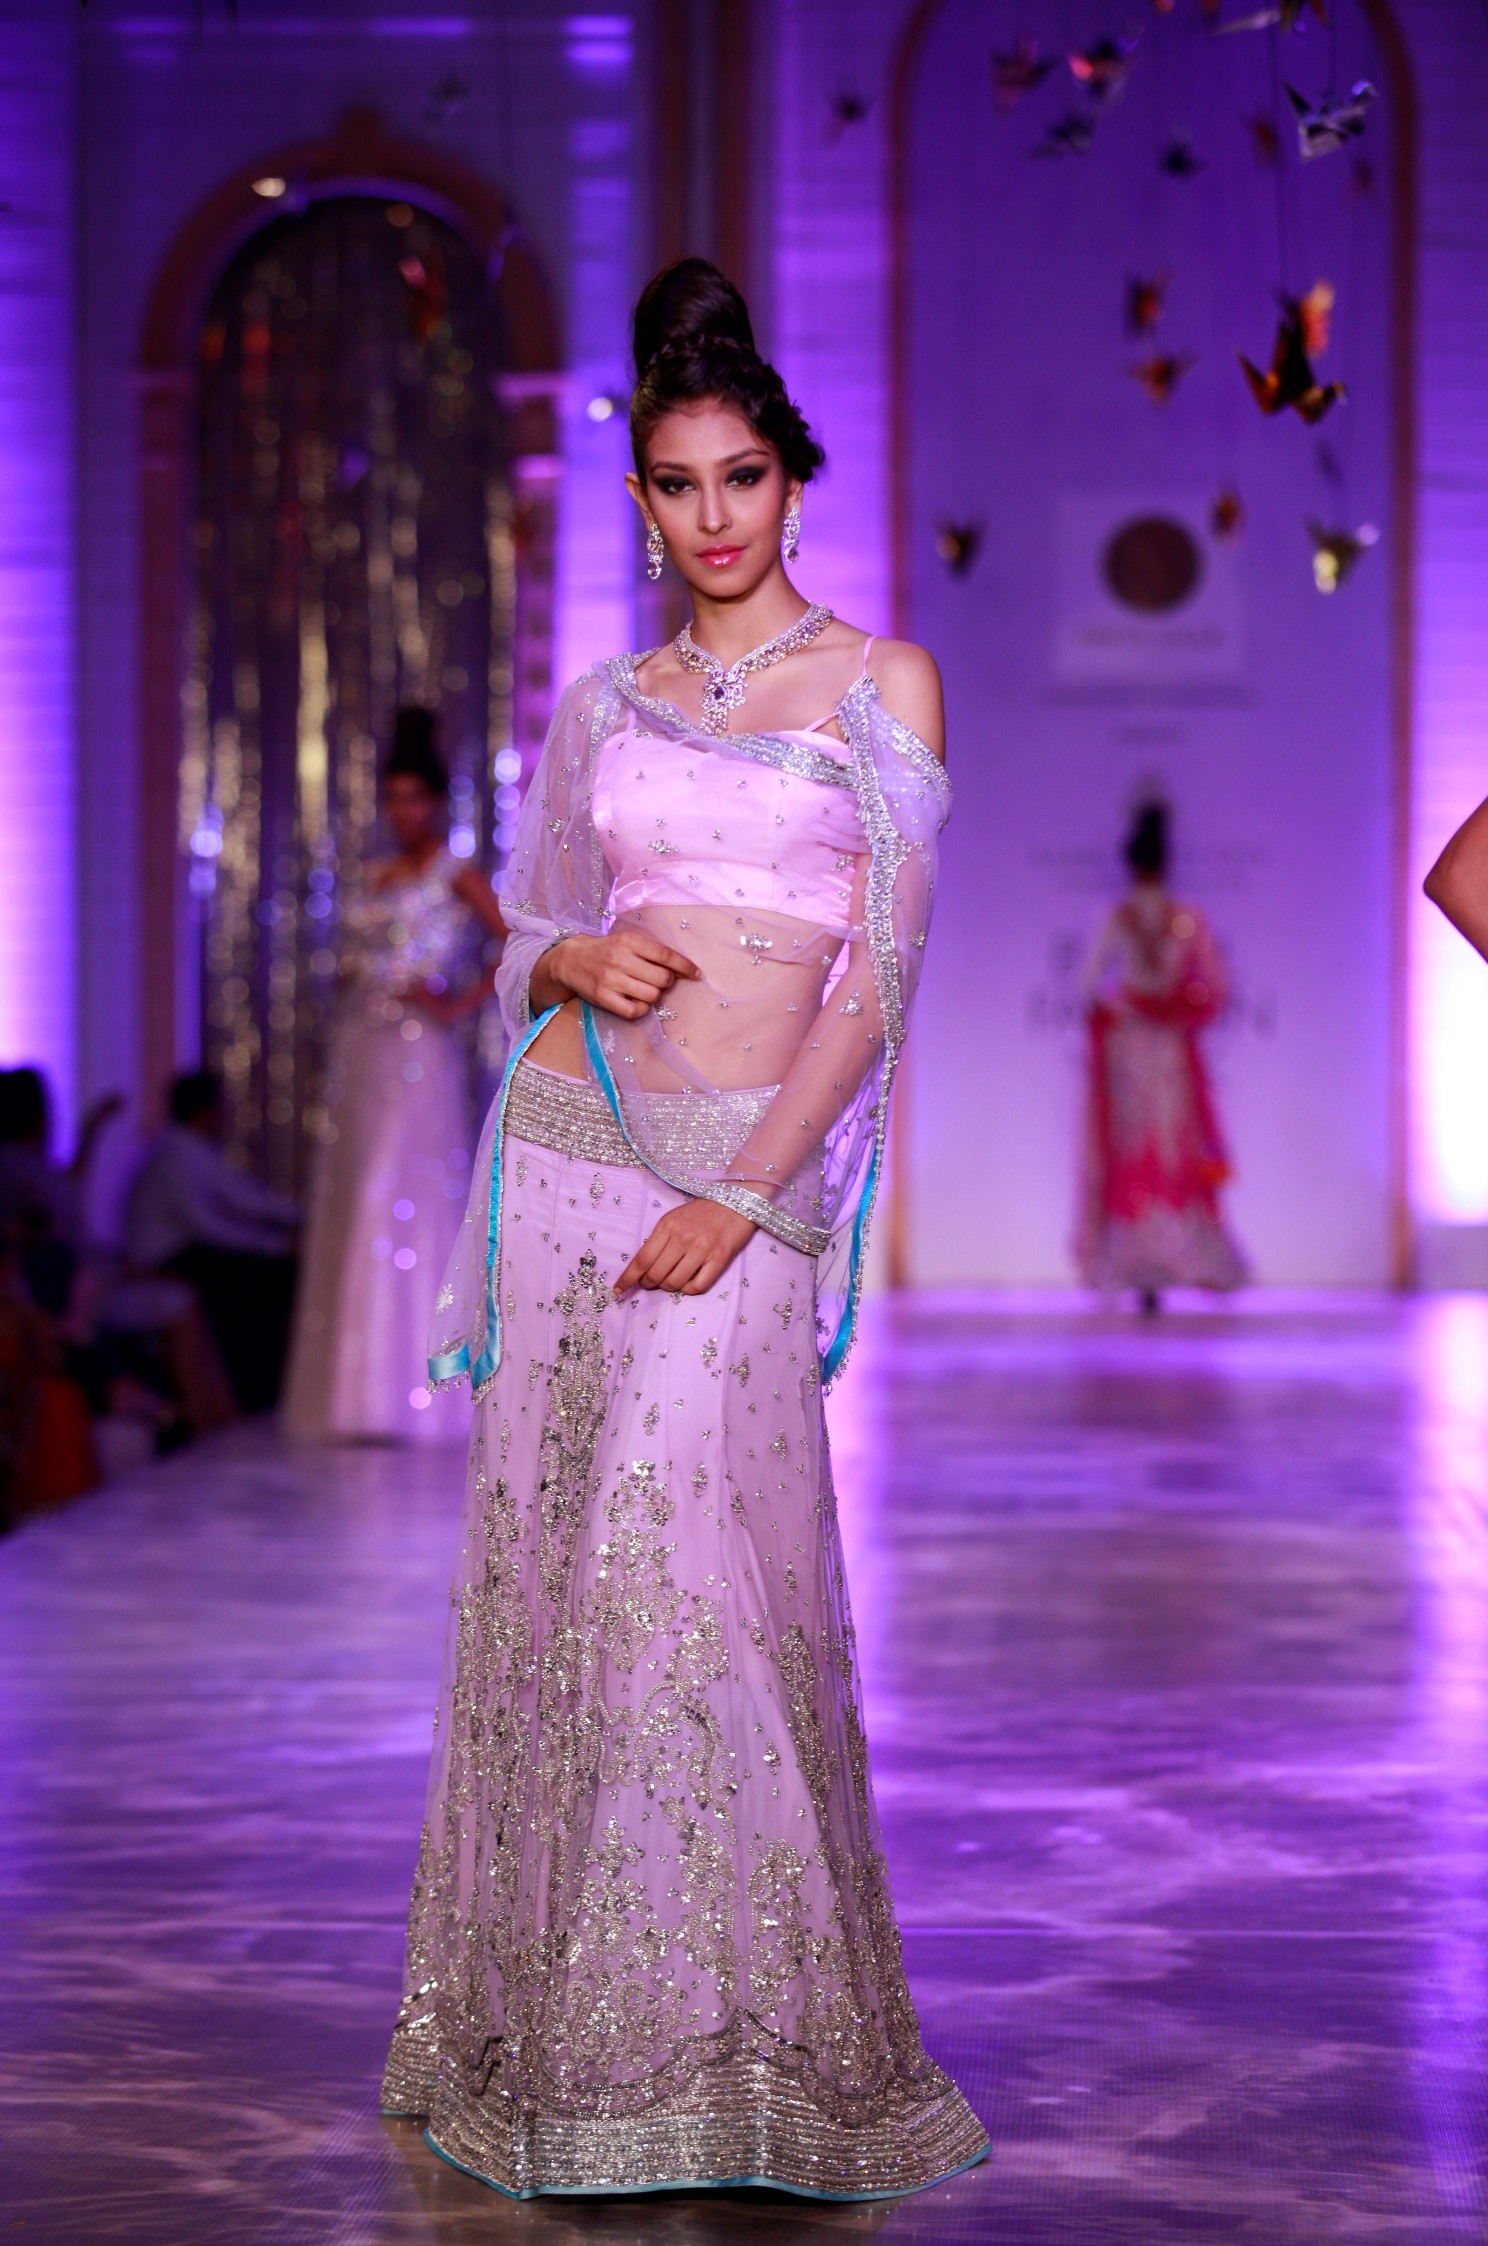 Seen at Aamby Valley India Bridal Fashion Week - Model walking for Neeta Lulla (10)